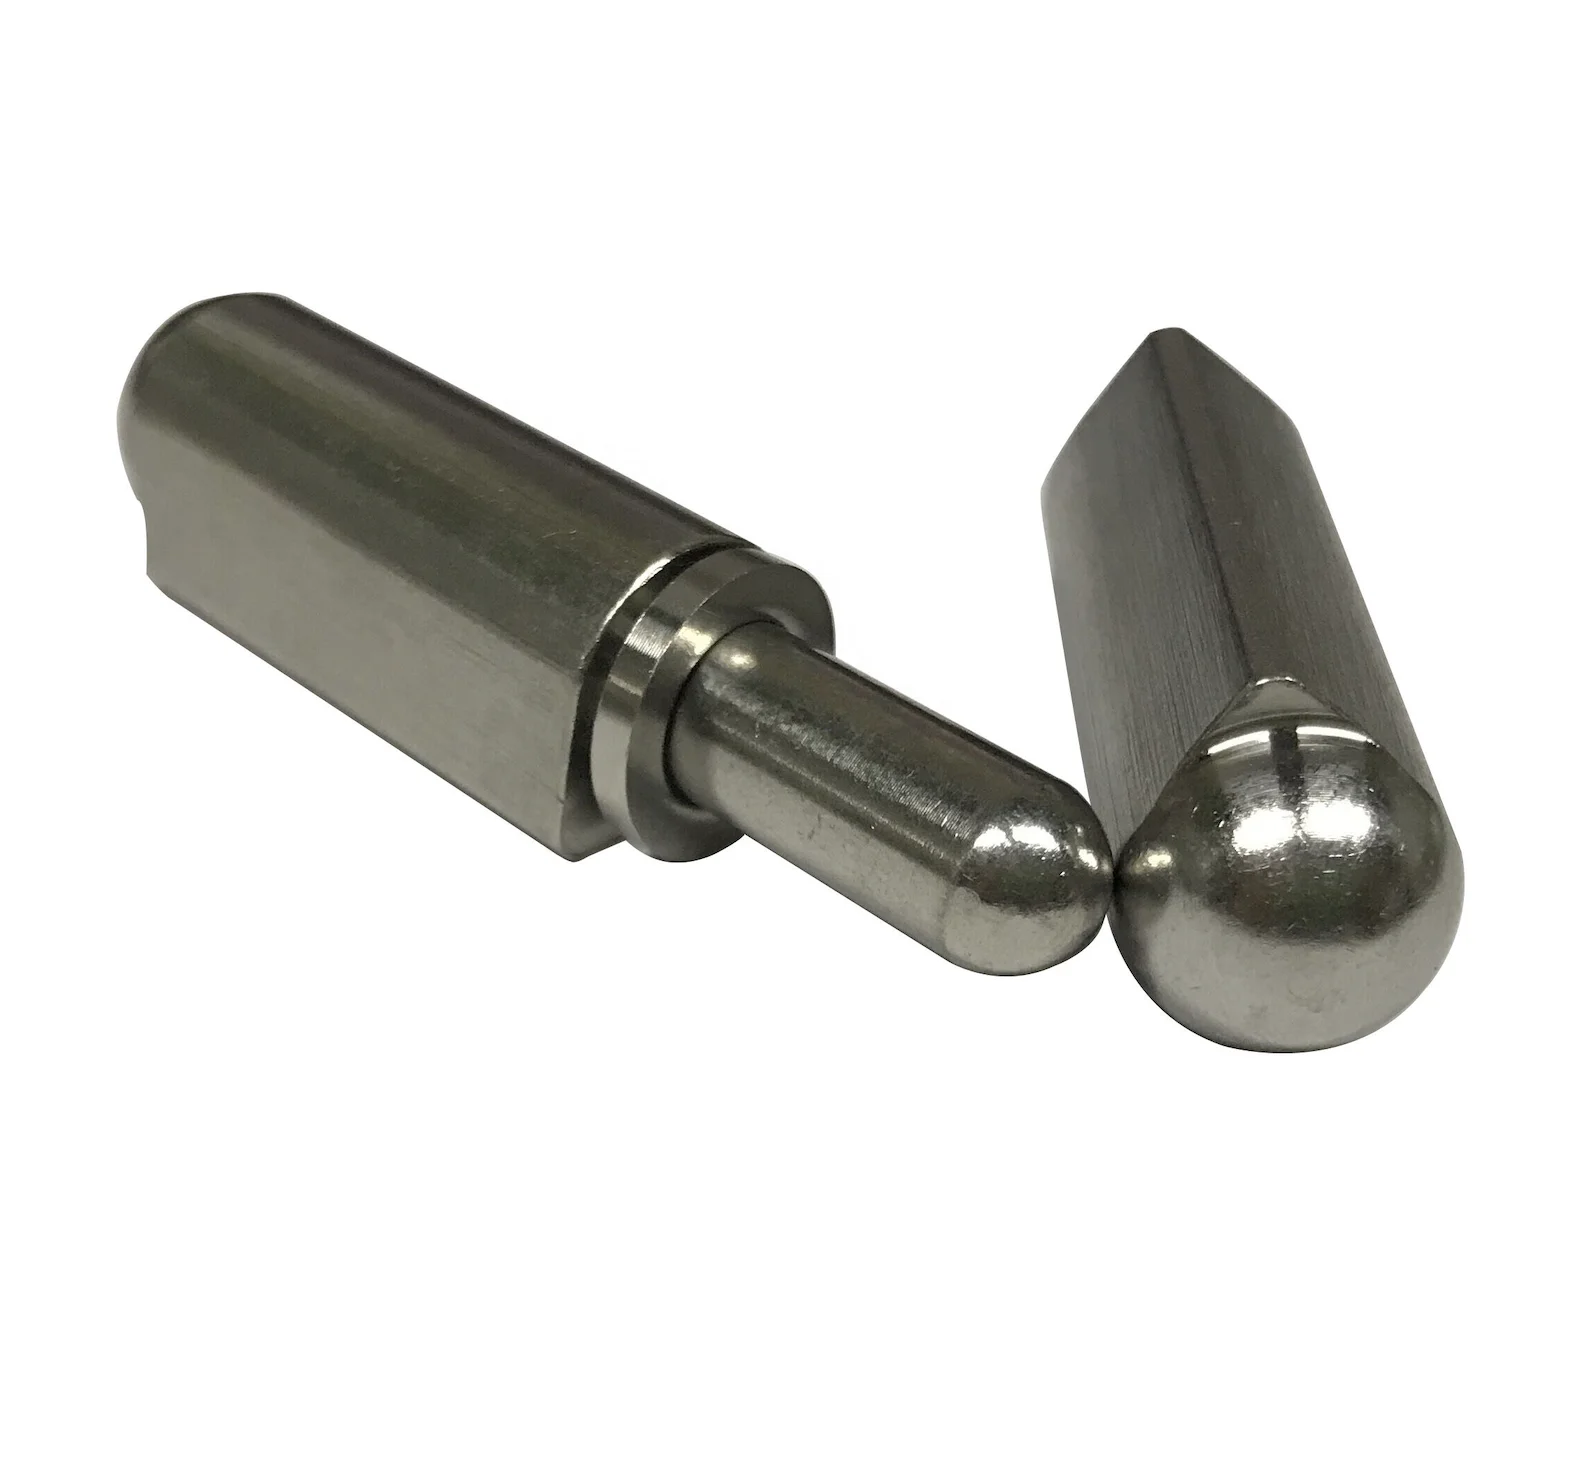 Teardrop welding hinge water drop welding hinge with ball bearing or washer for swing gate (1600593279742)